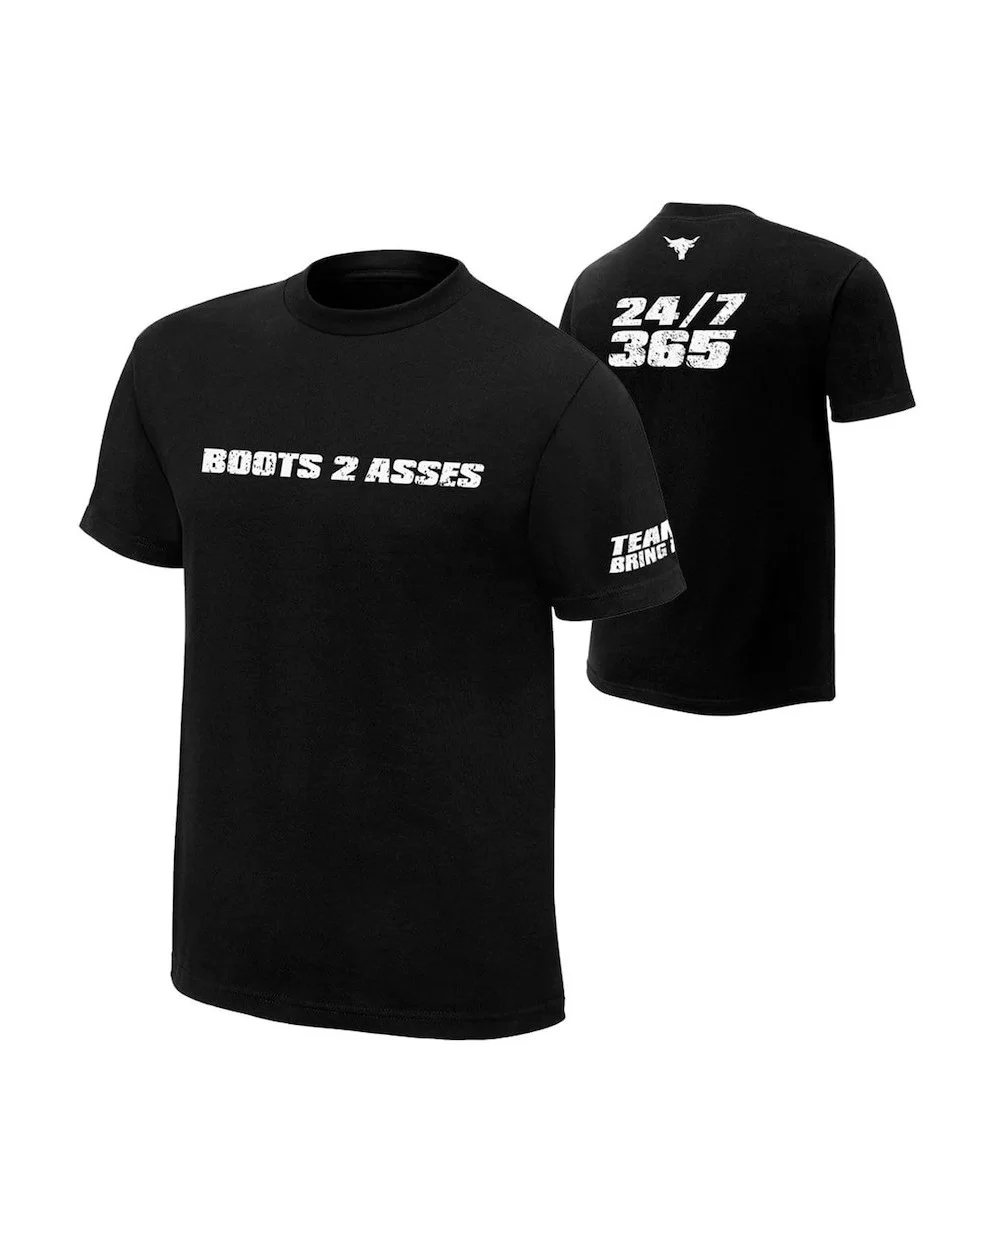 Men's Black The Rock Boots 2 Asses T-Shirt $8.88 T-Shirts